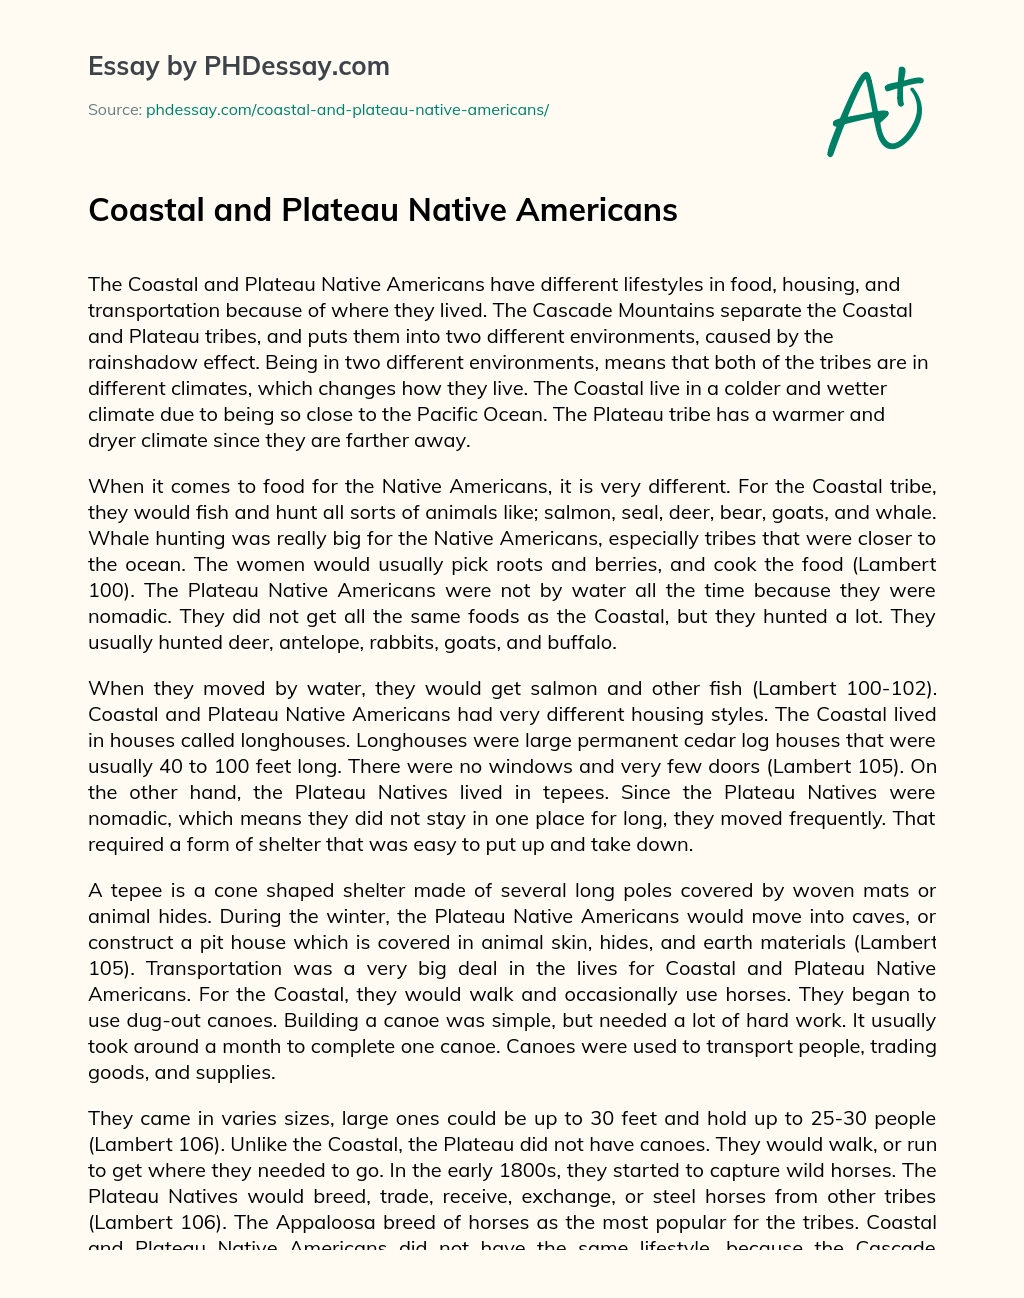 Coastal and Plateau Native Americans essay